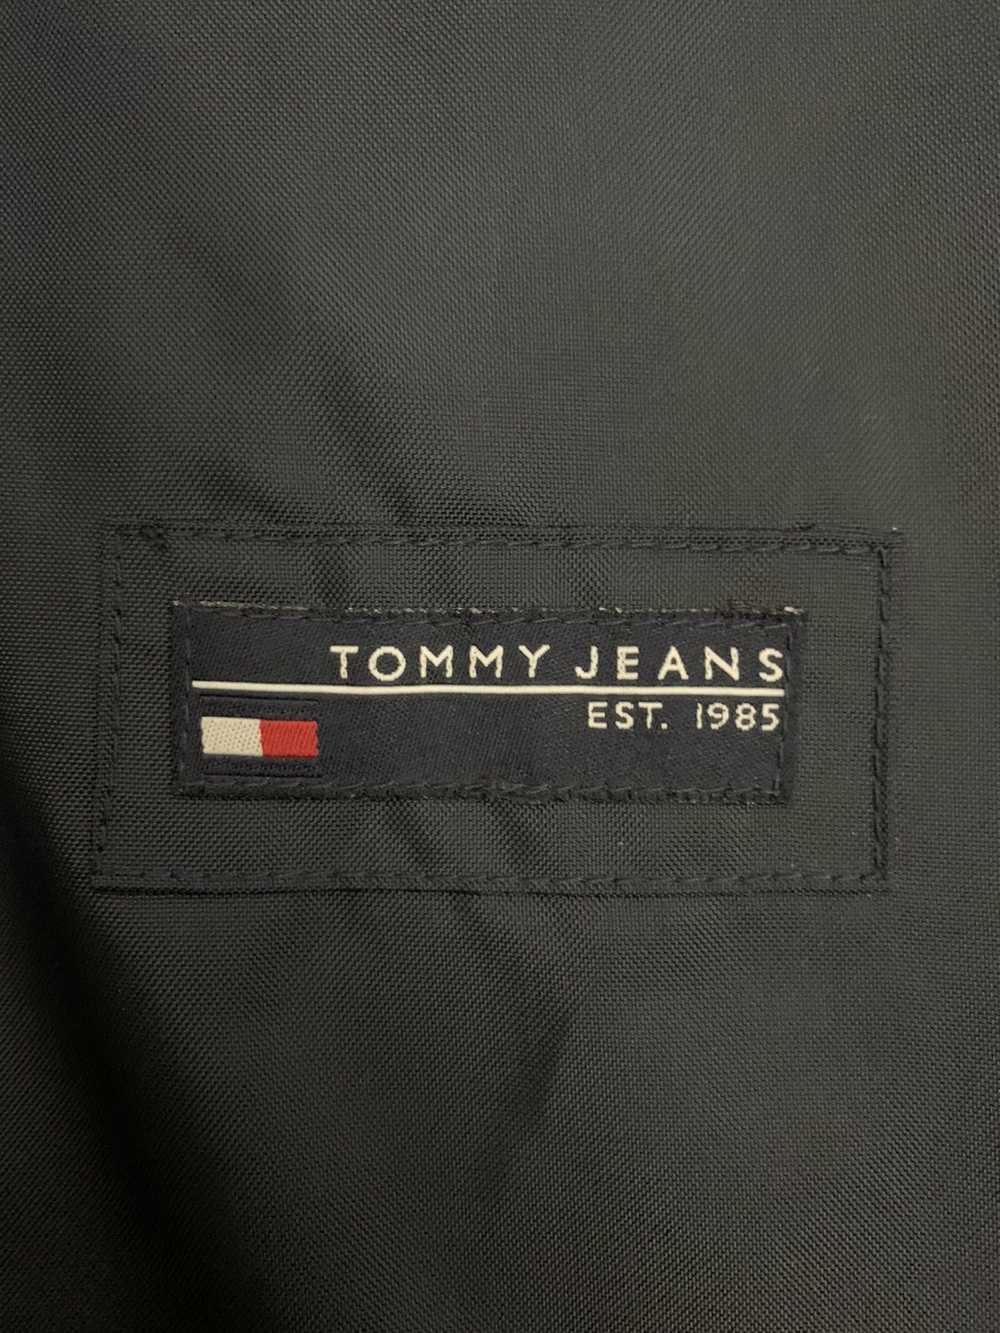 Tommy Jeans Tommy jeans jacket - image 4